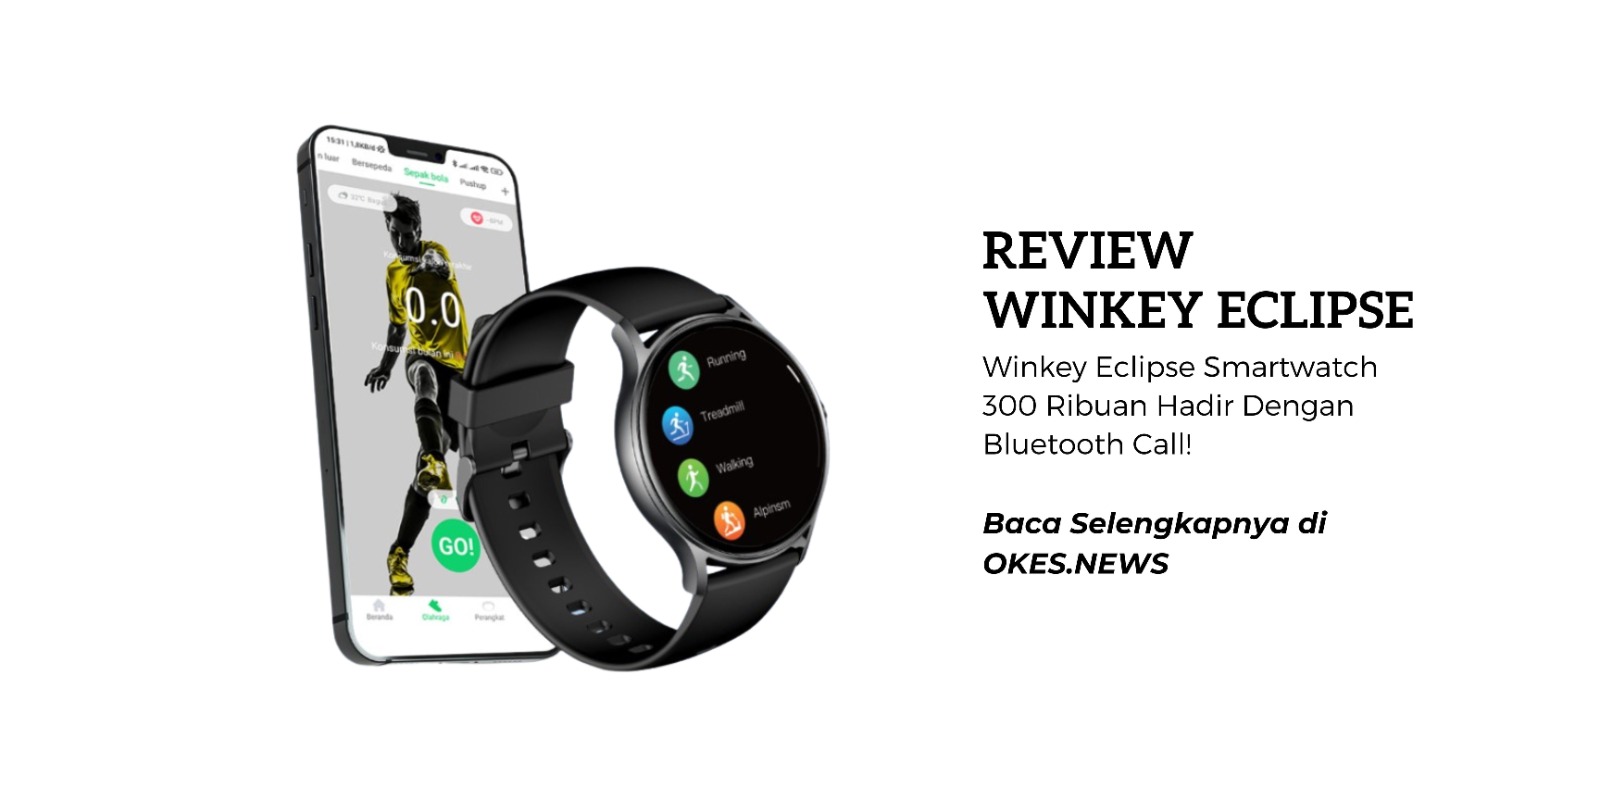 Winkey Eclipse Smartwatch, Fitur Lengkap dengan Harga Terjangkau 